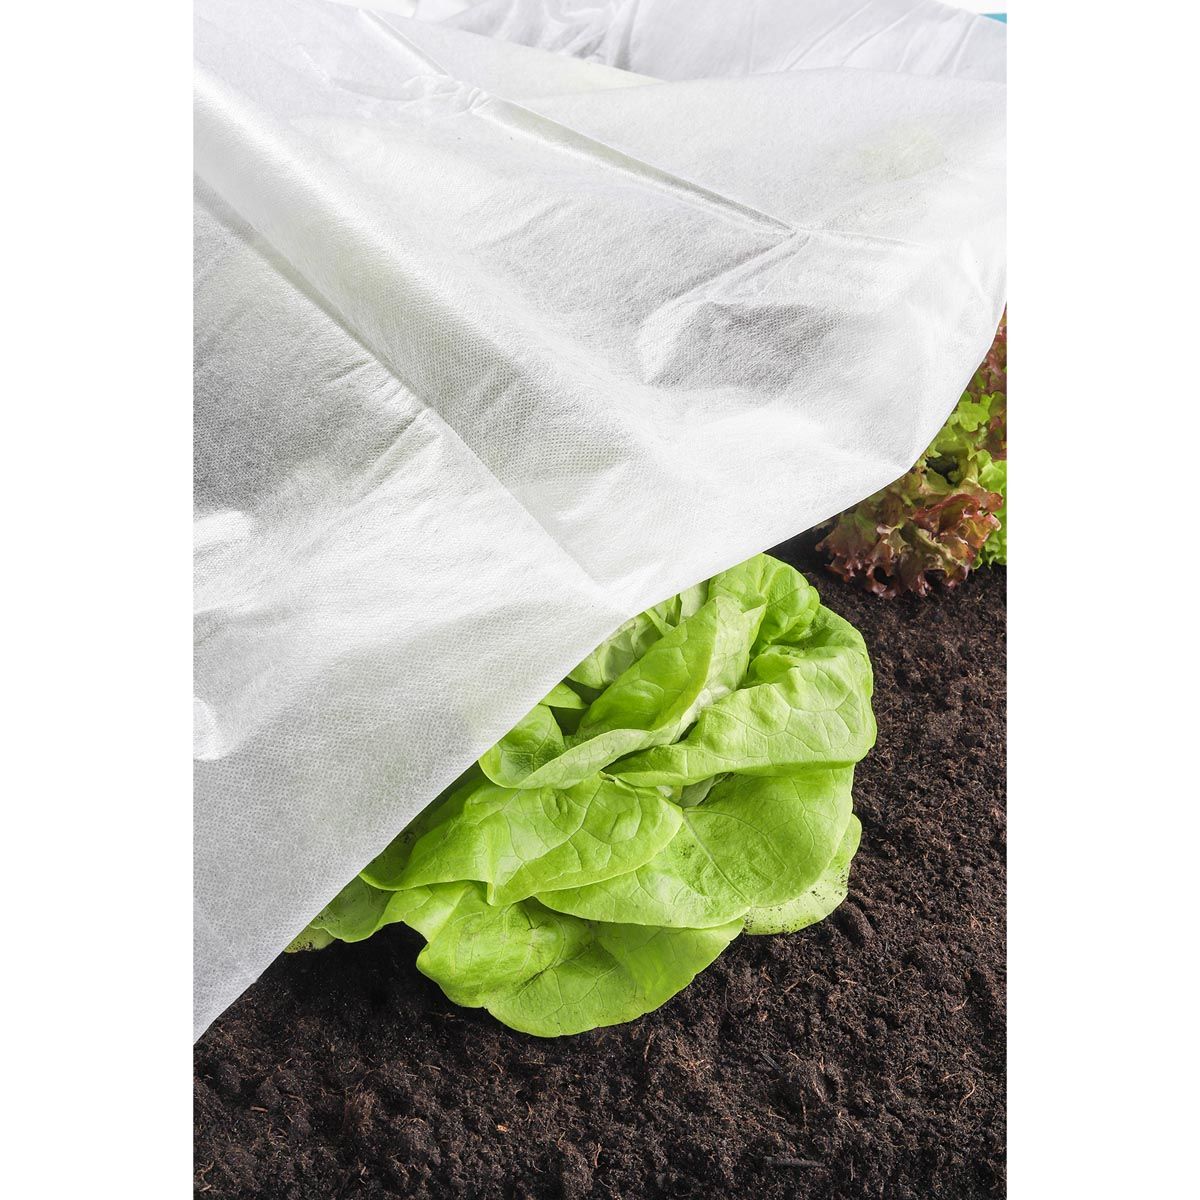 Haushalt international Netkaná textilie na ochranu rostlin, bílá, 5 m - Velký Košík